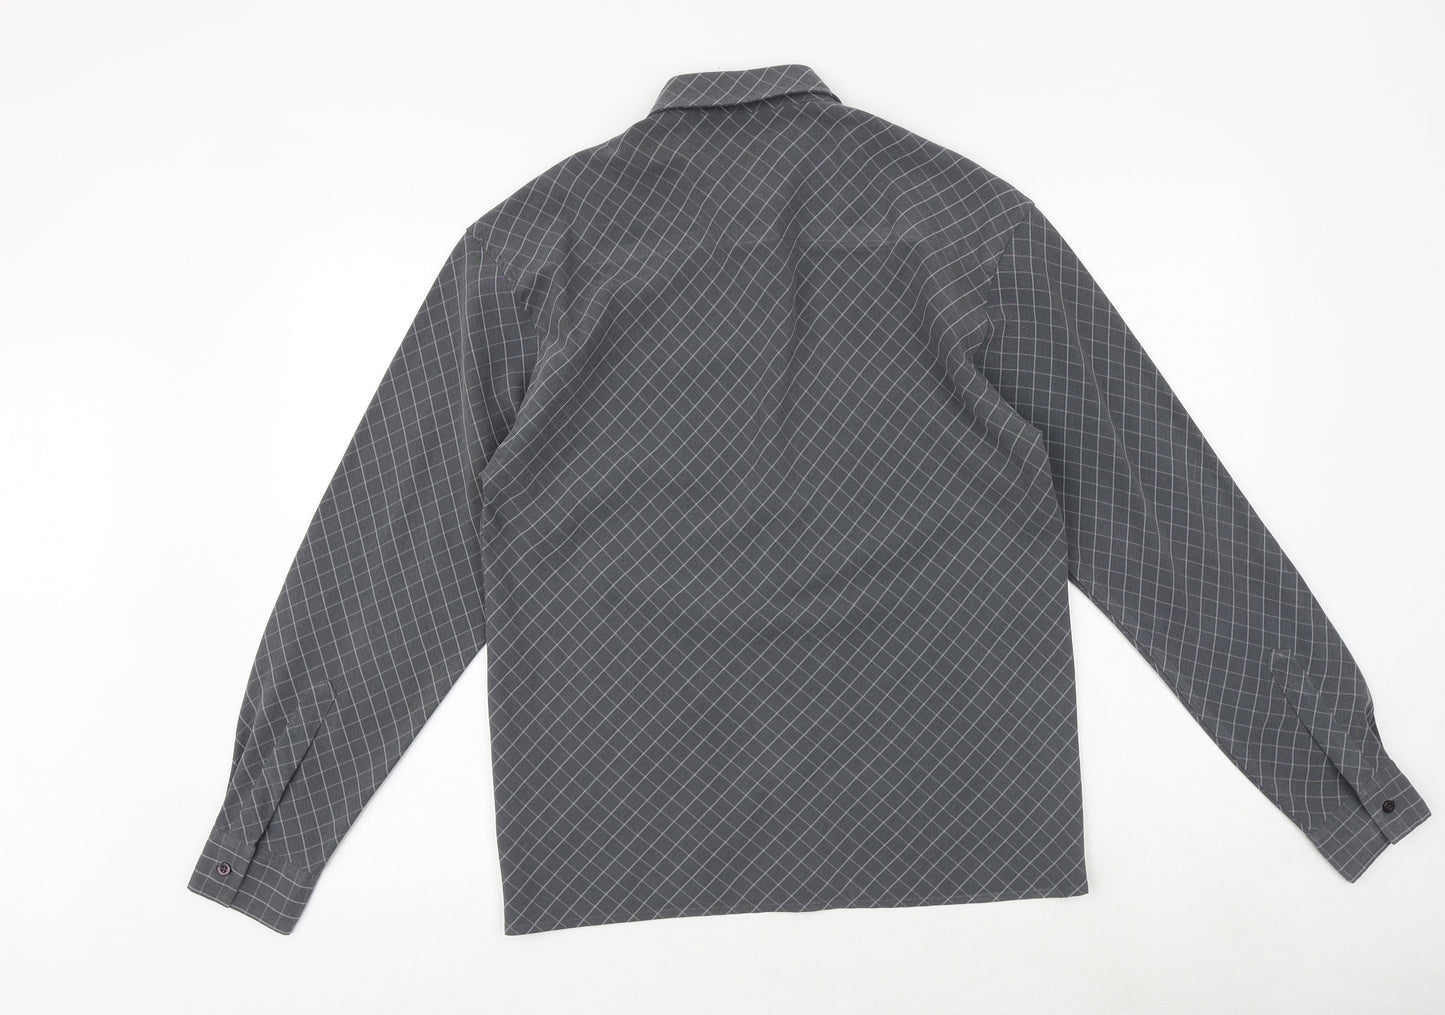 St Bernard Mens Grey Argyle/Diamond Polyester Button-Up Size S Collared Button